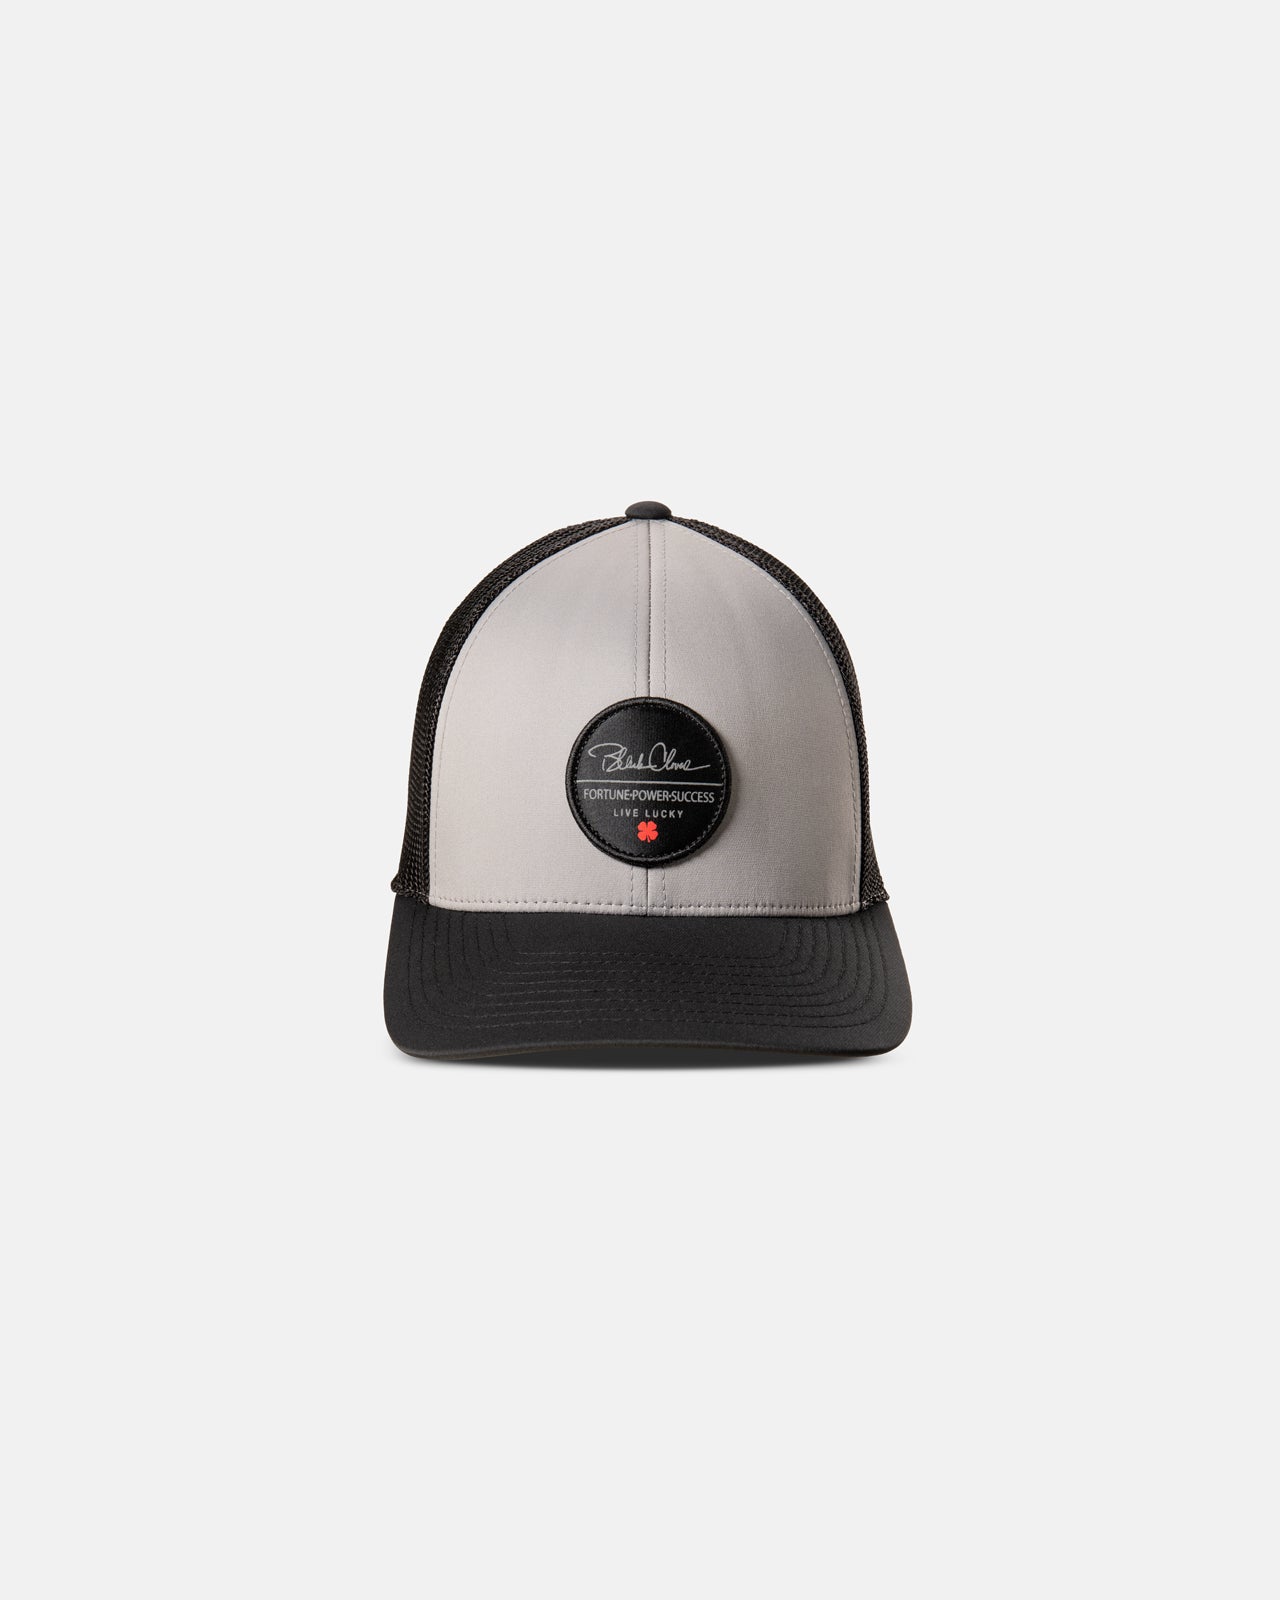 Louisville Pride Adjustable | Golf Hats | Black Clover | Live Lucky Hats